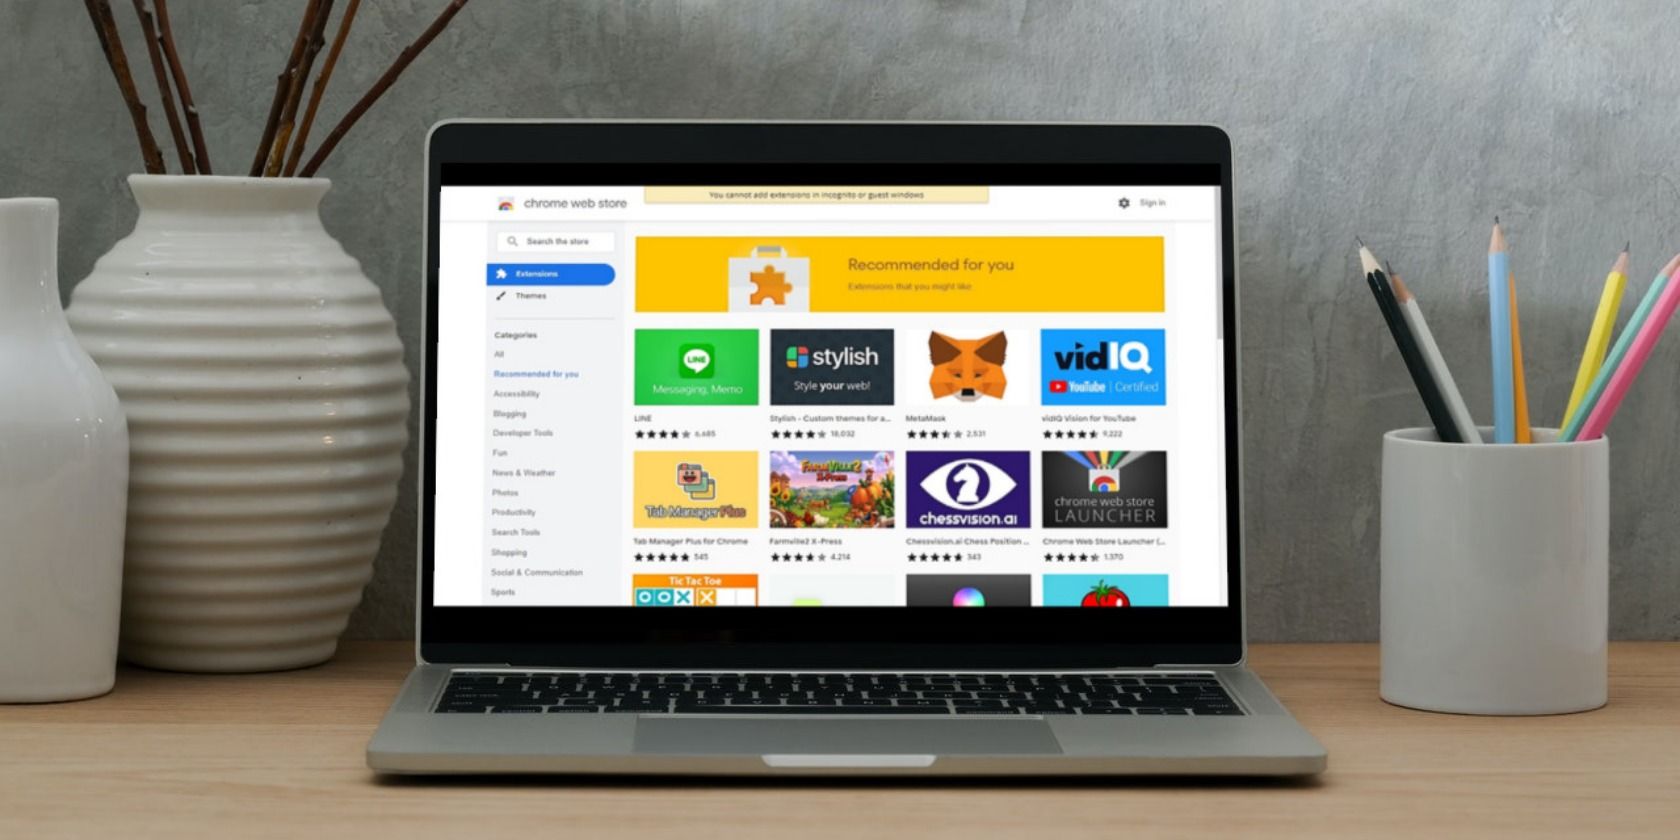 Chrome Web Store on a laptop screen